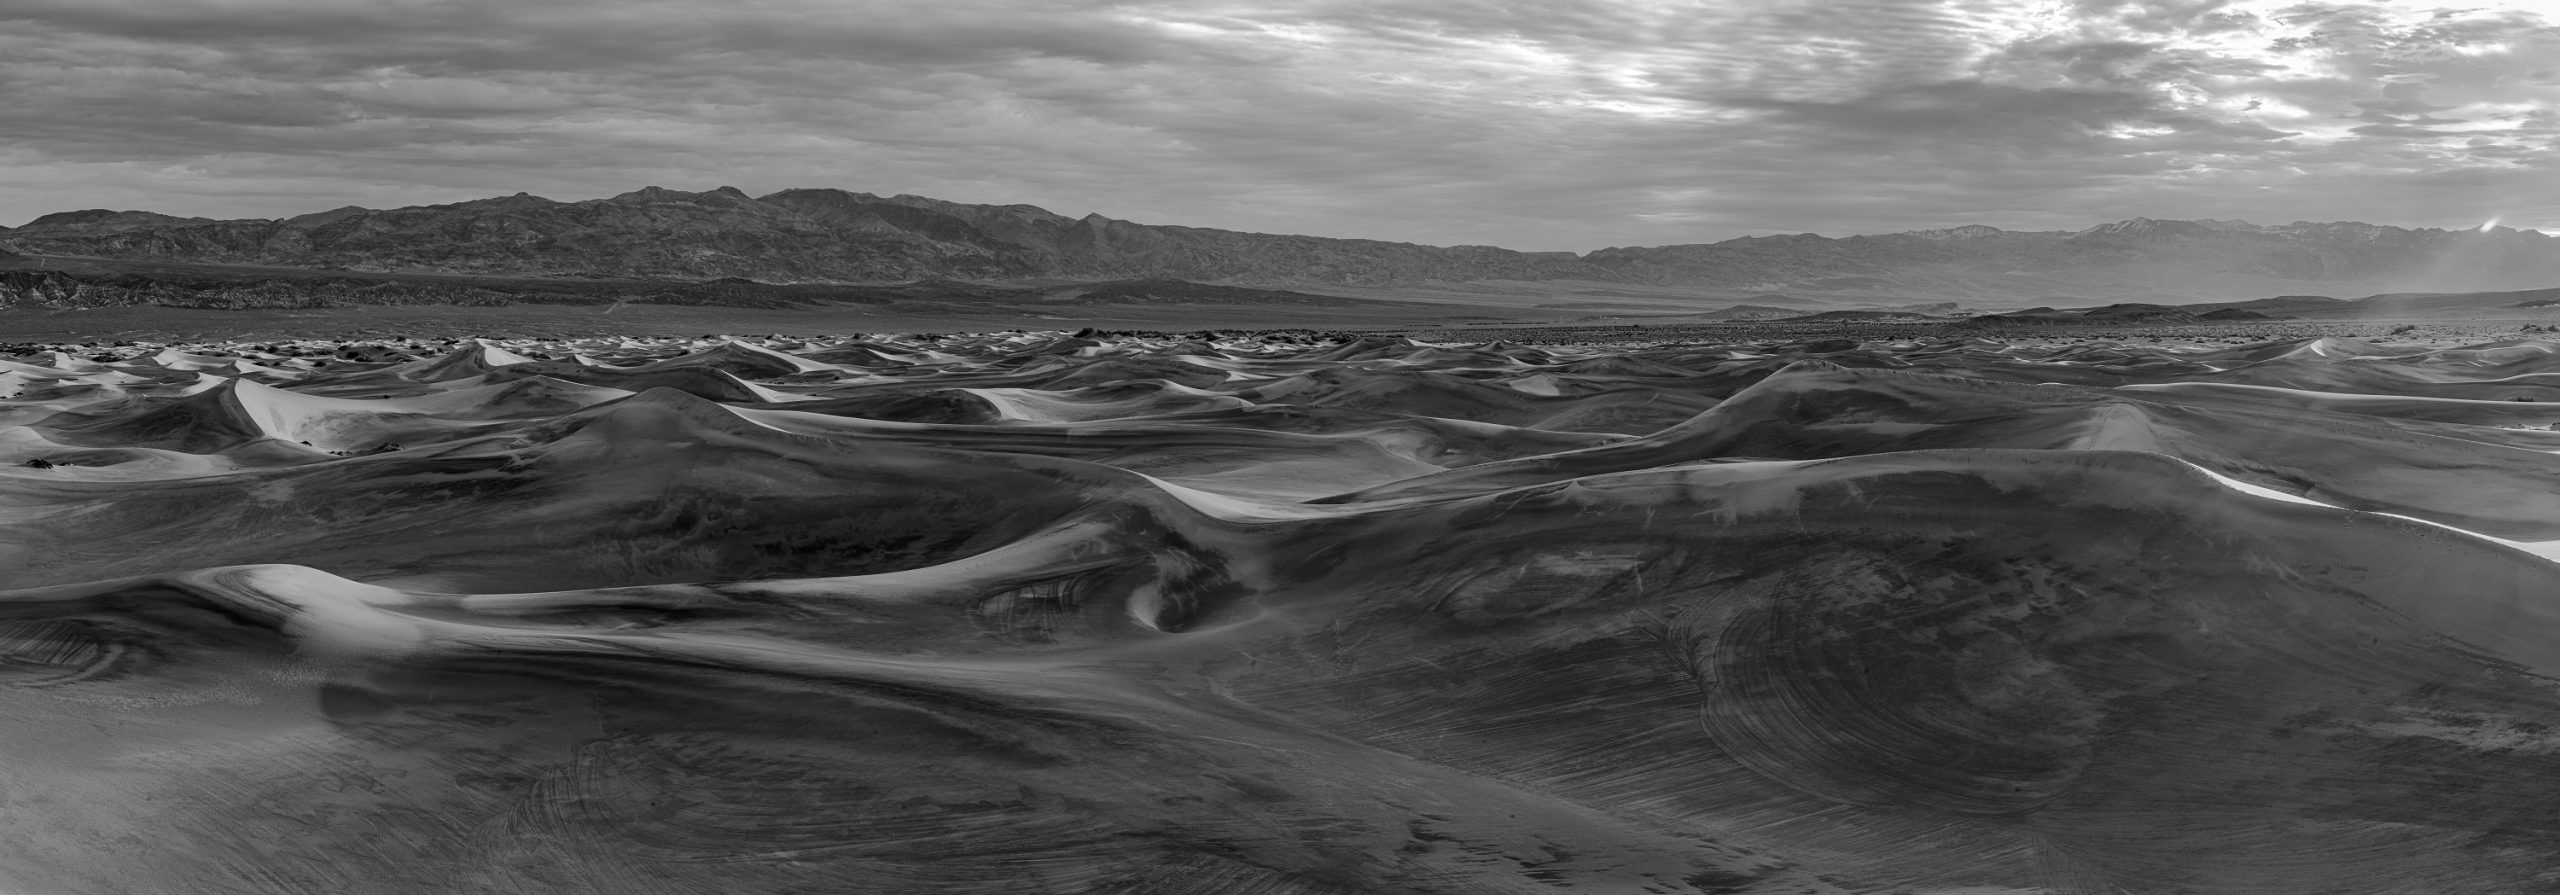 Category Landscape photo winner - Vasilis Livanos - Sea of Sand